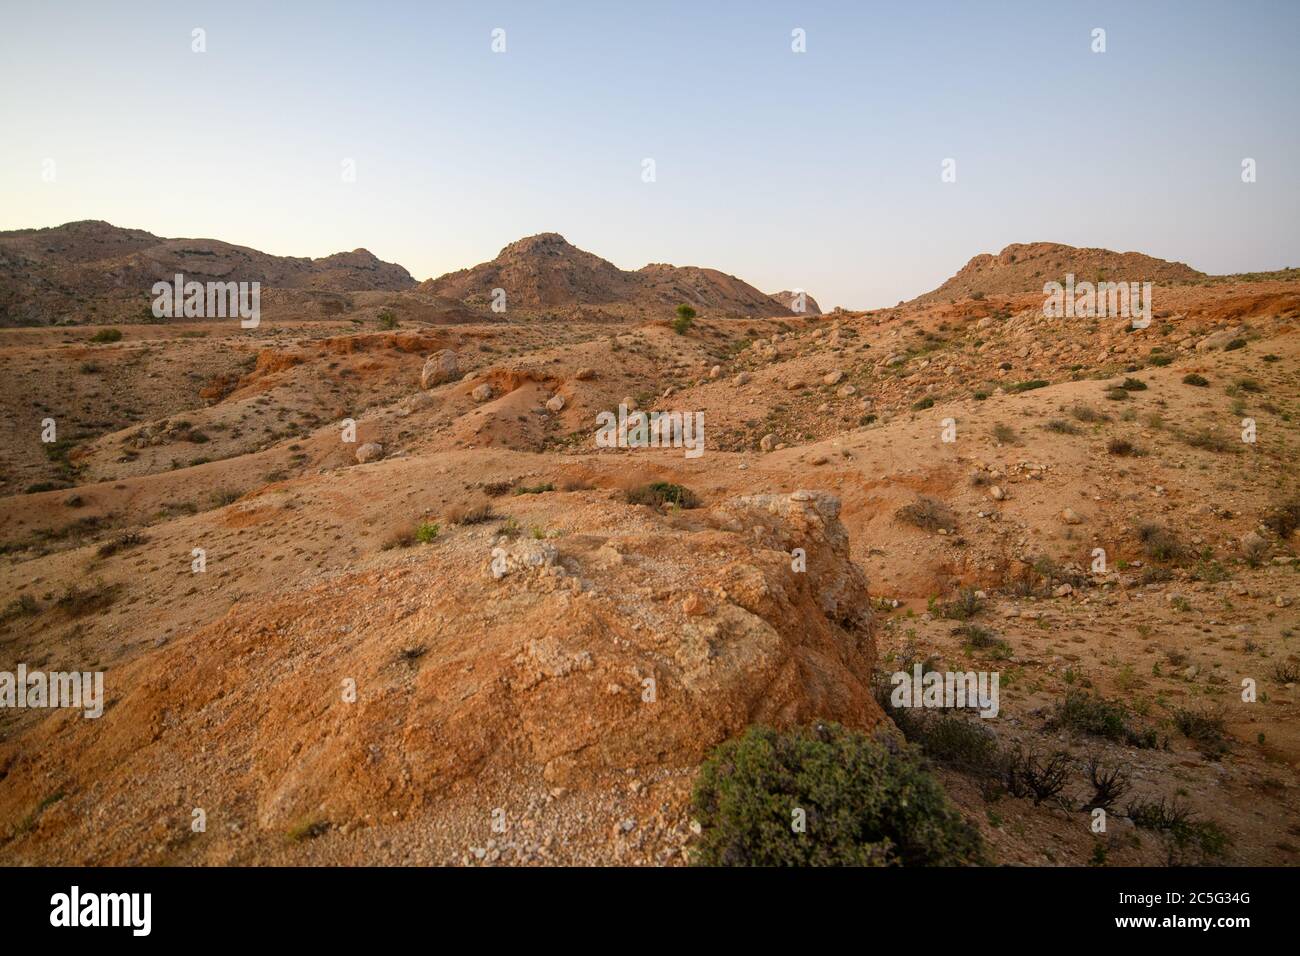 Landscape in Aus, Karas Region, Namibia Stock Photo